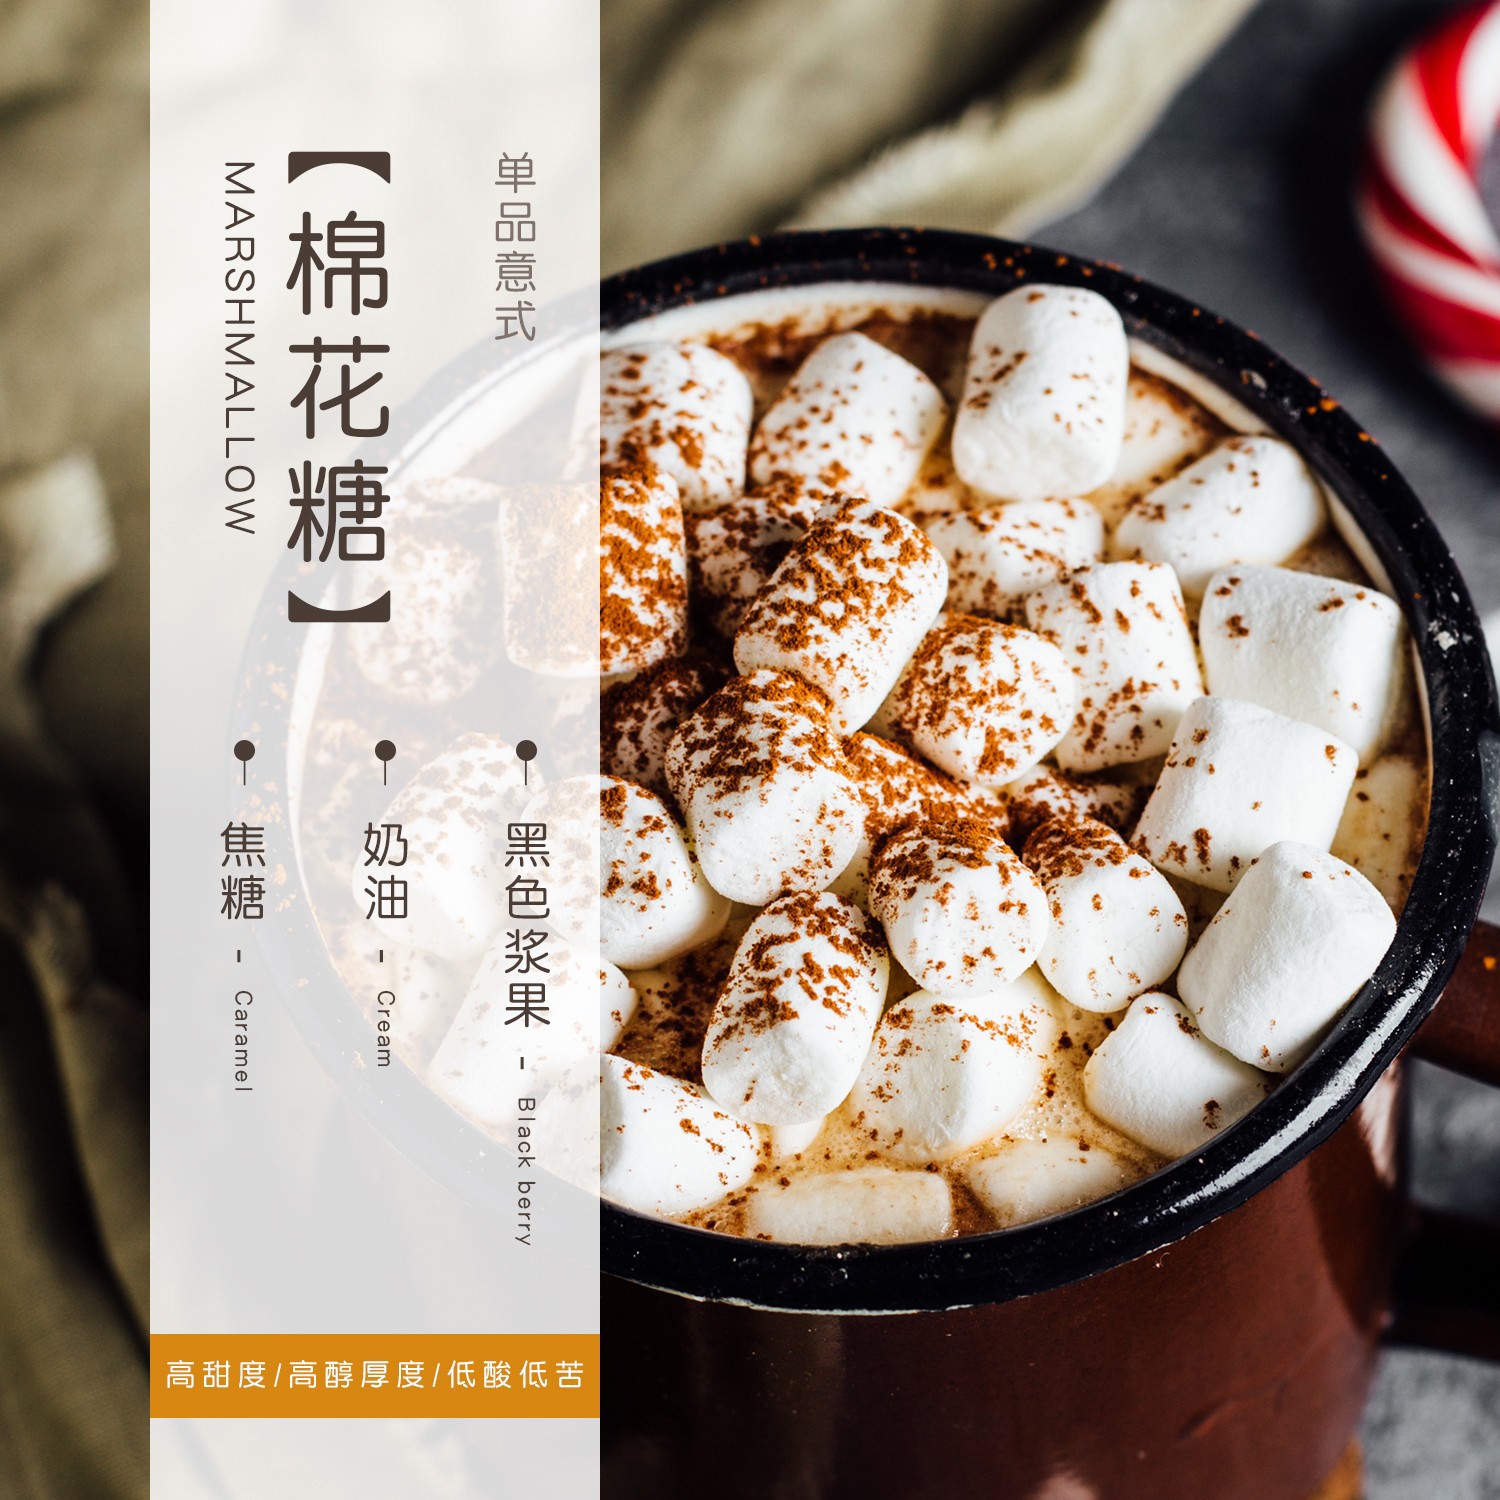 FOR COFFEE 四人咖啡 棉花糖SOE 意式咖啡豆 454g